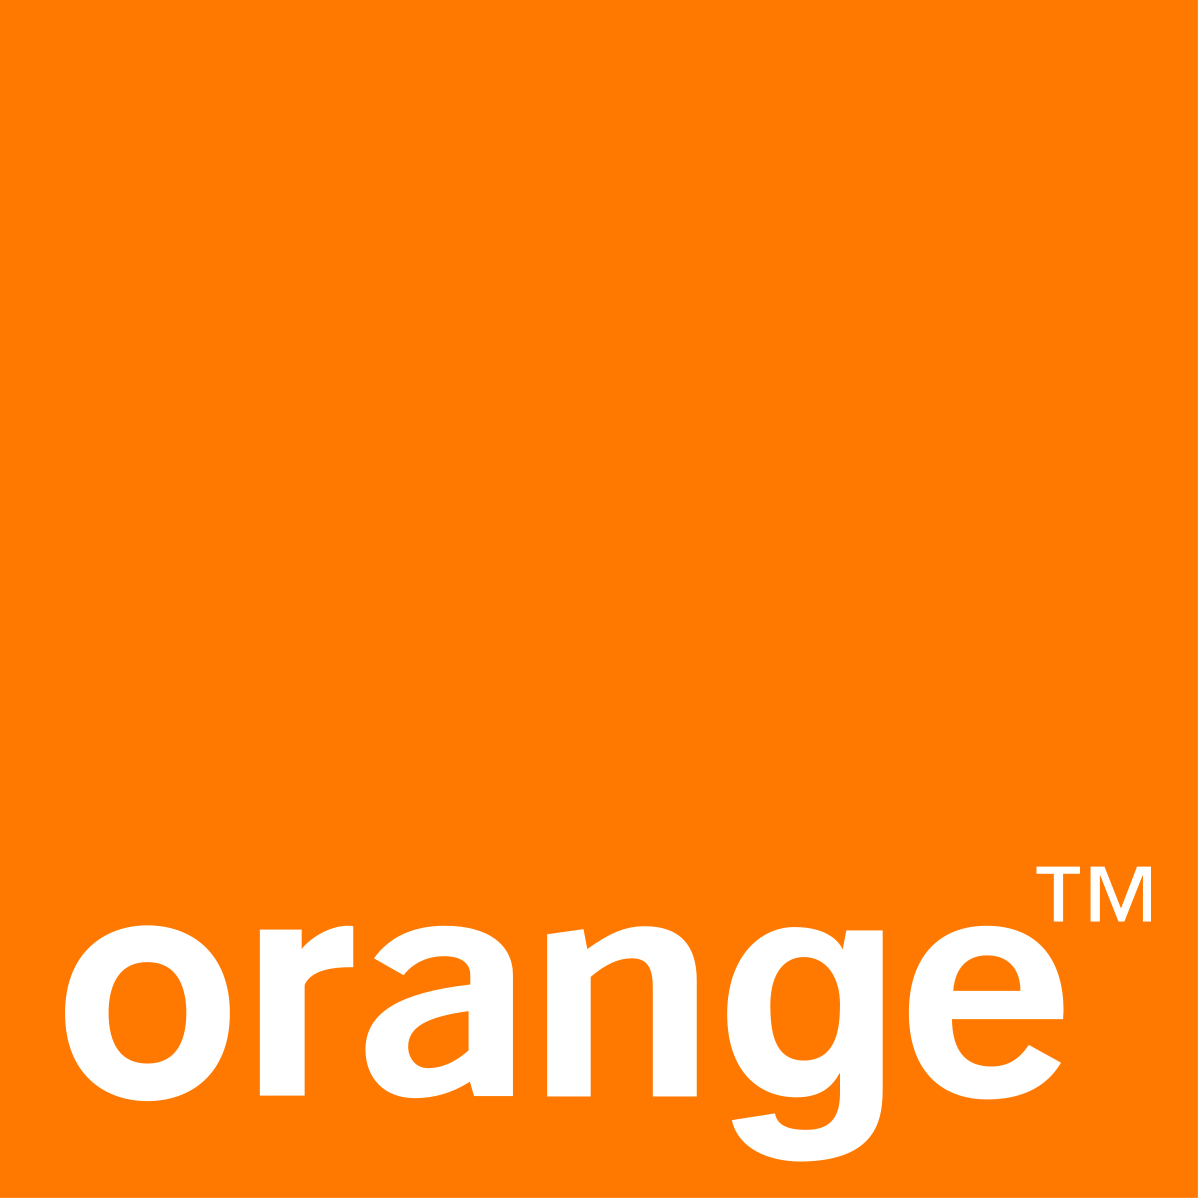 heuvel Attent rechter Orange UK - Wikipedia